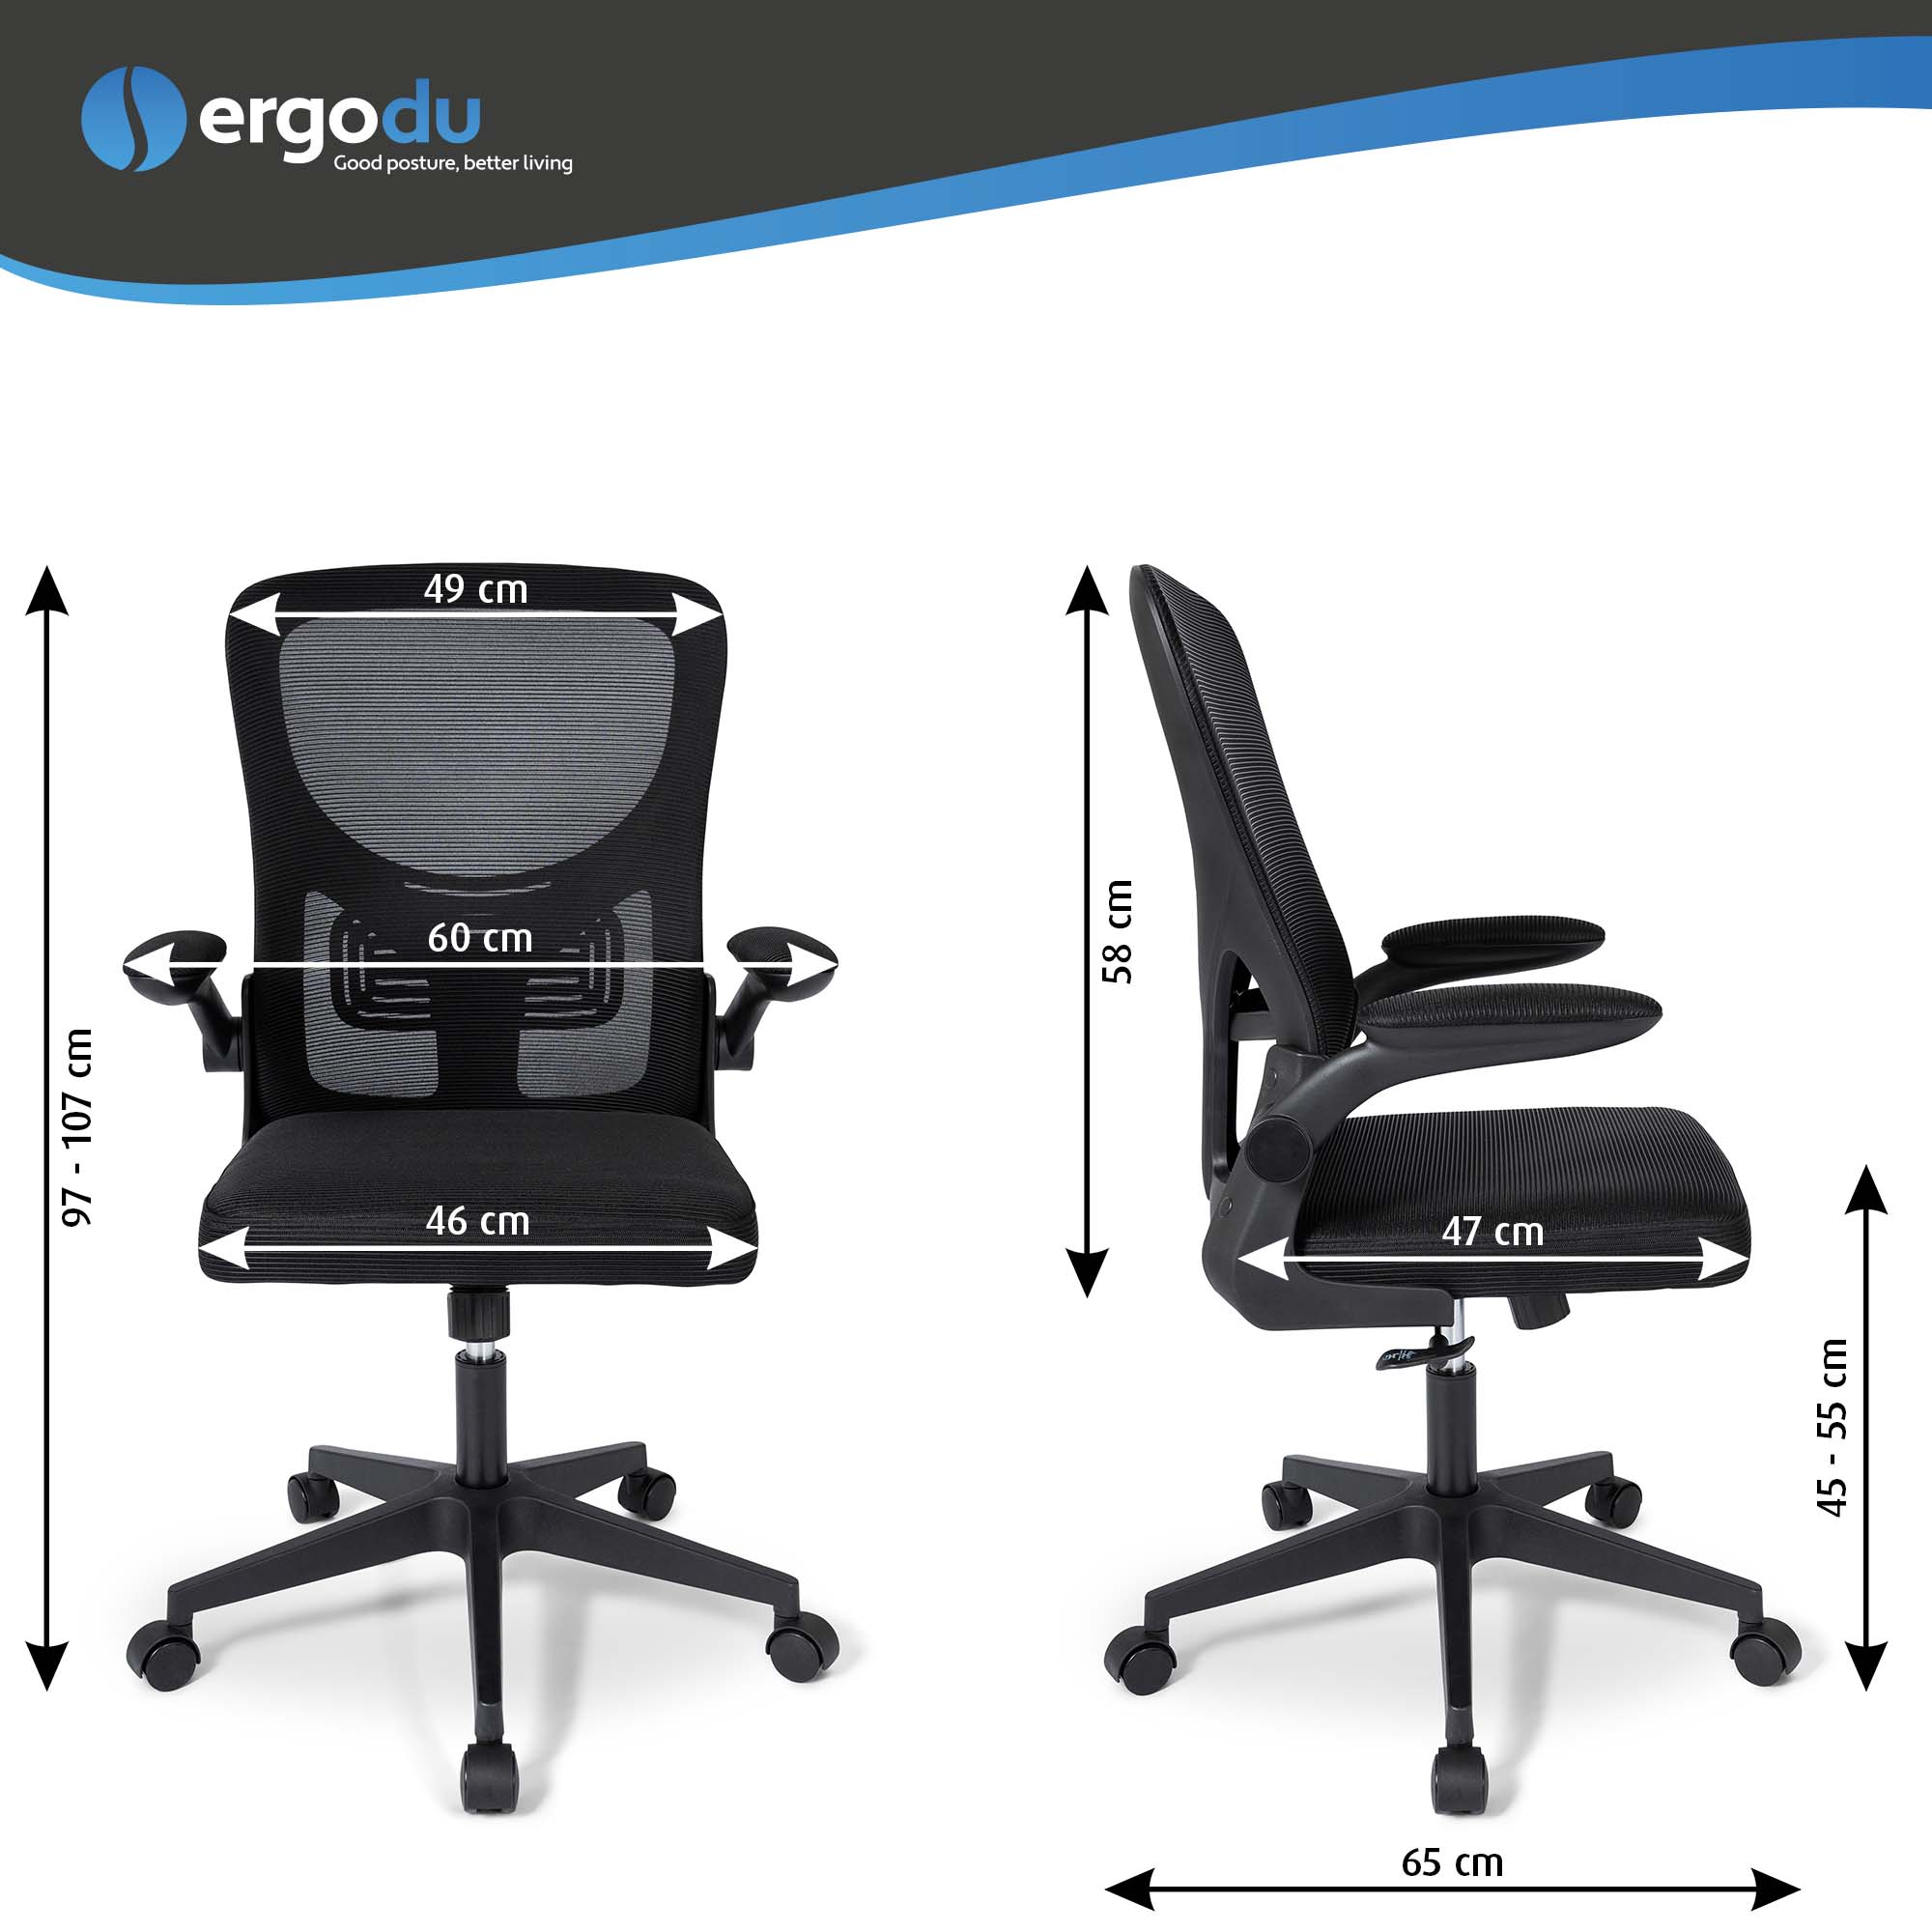 Ergodu Ergonomic Office Chair with Foldable Armrests size chart